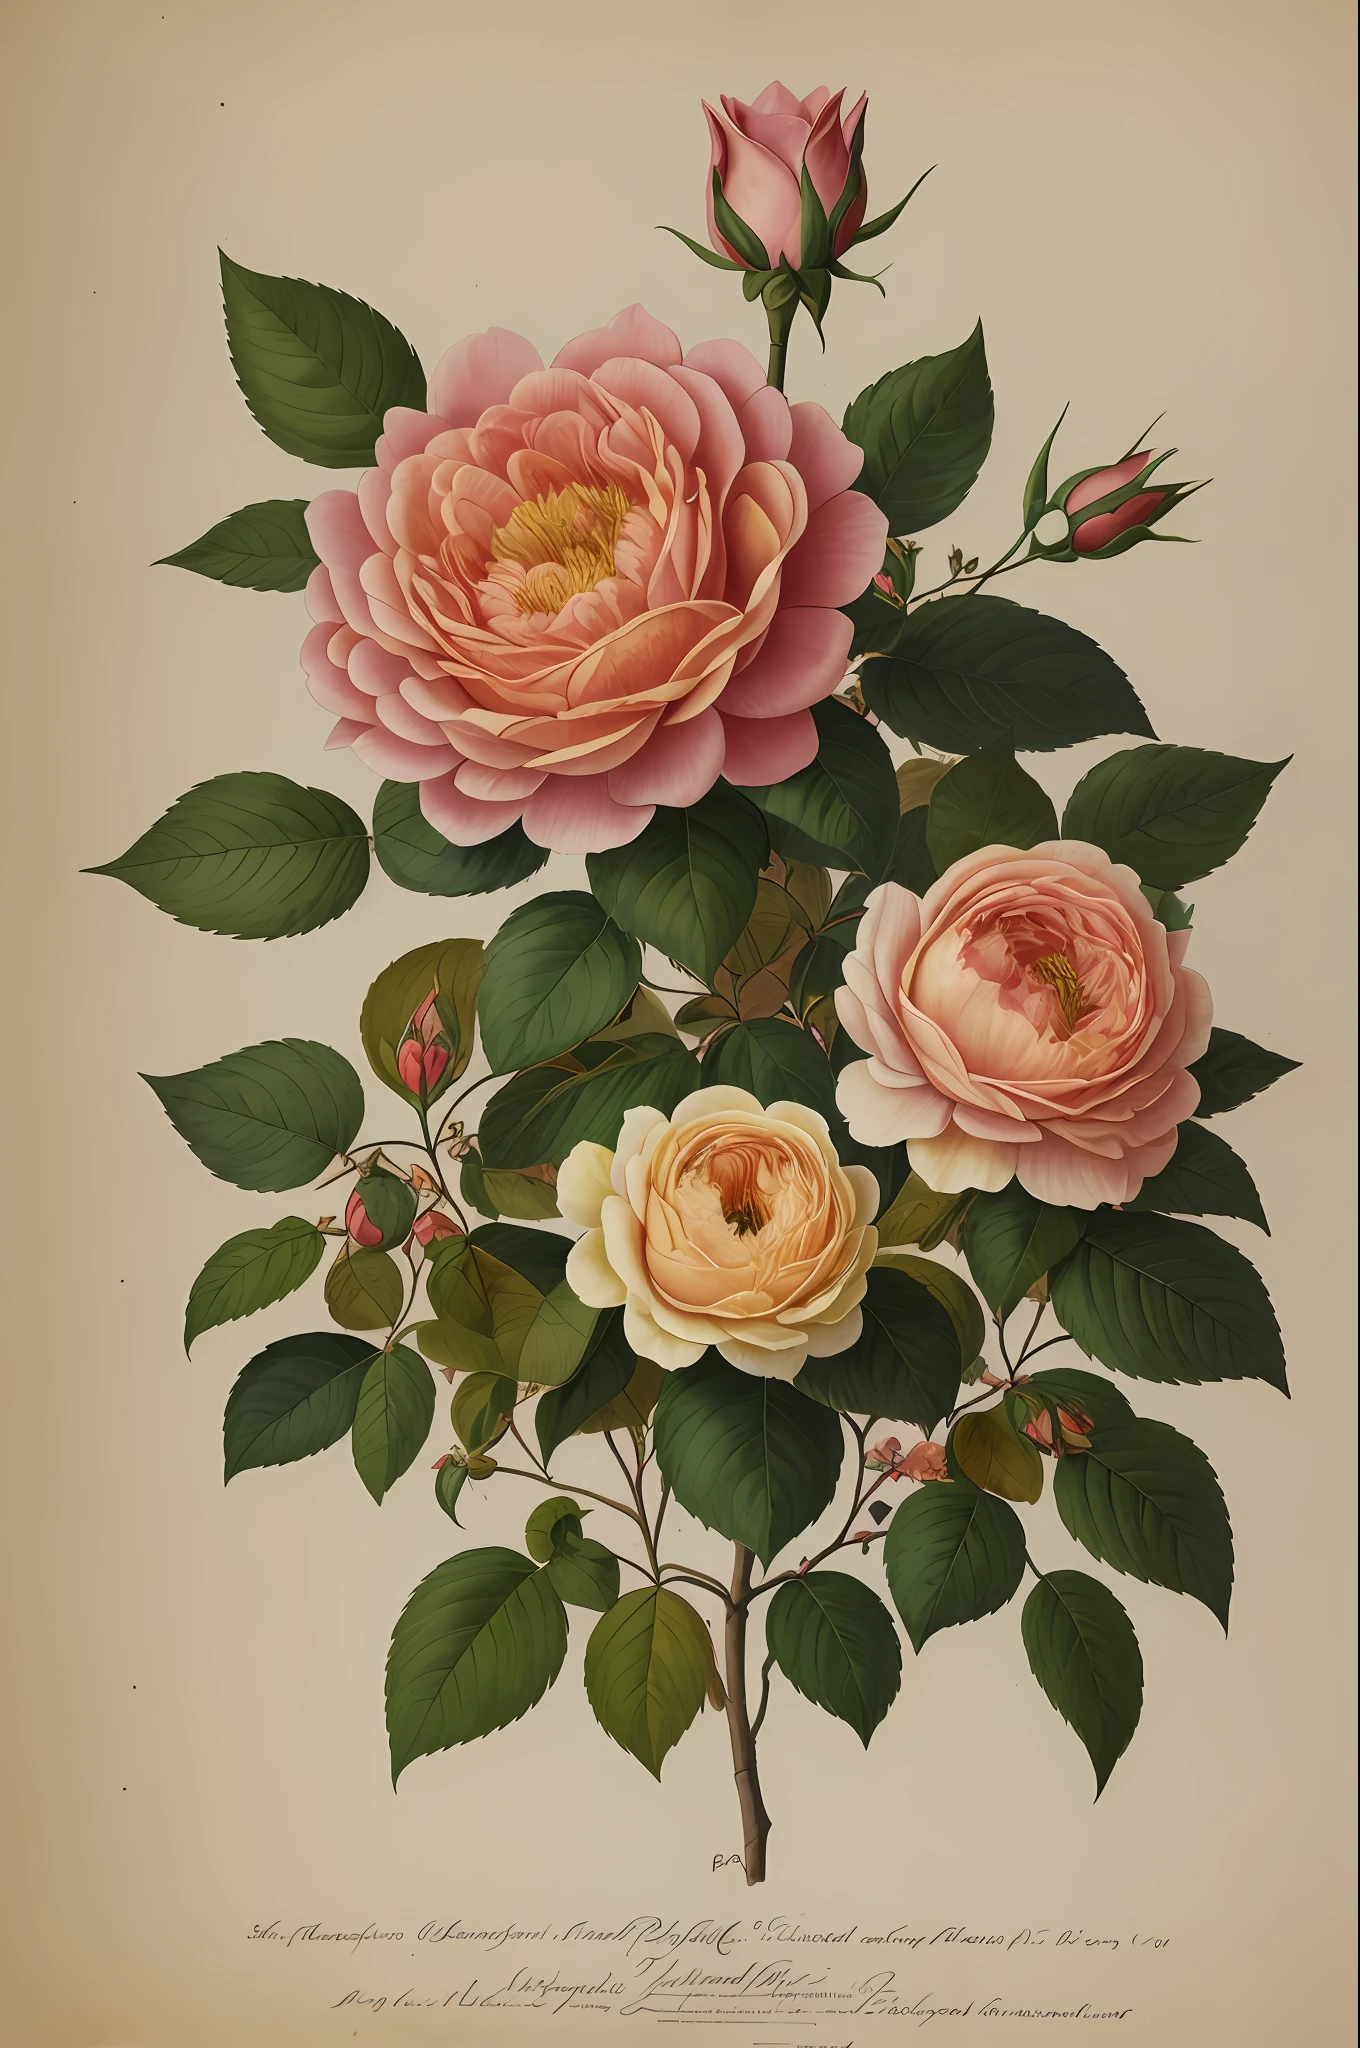 (best quality:1.2), (detailed:1.2), (masterpiece:1.2), vintage botanical illustrations of Larger Provence Rose (1770 1775) in high resolution by John Edwards